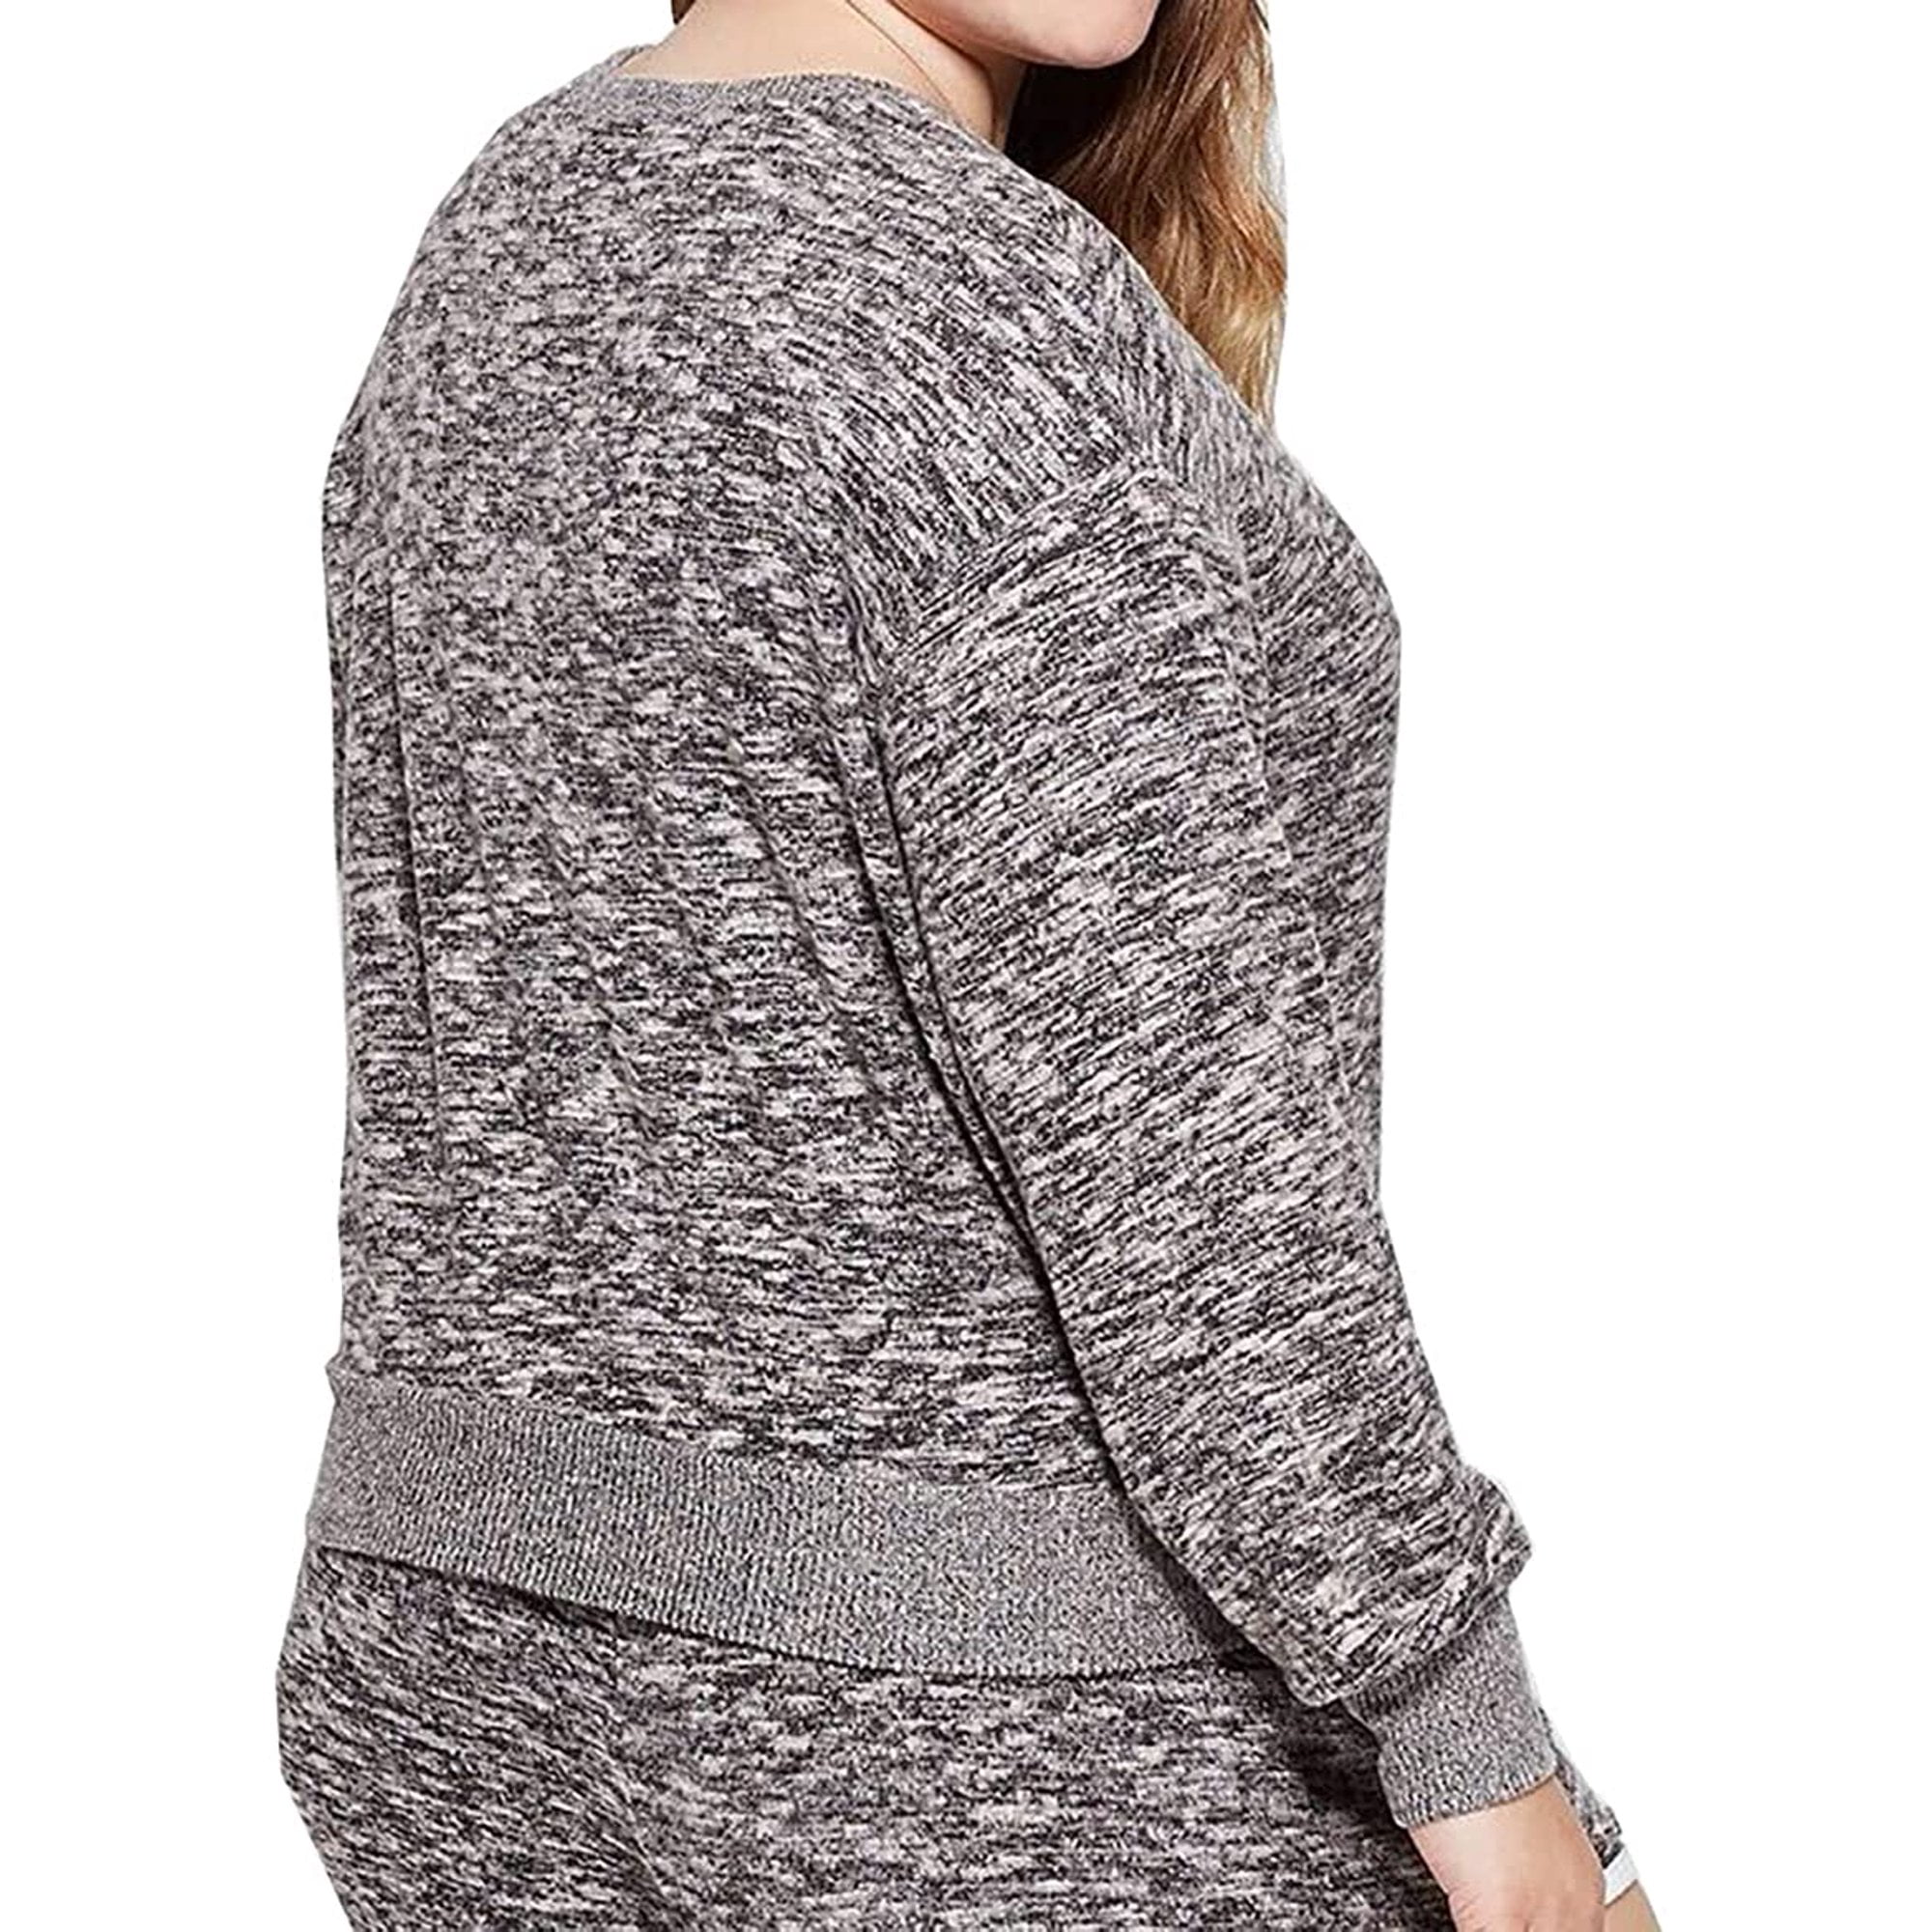 Colsie Women's Plus Size Lounge Pajama Set Sweatpants/Top : :  Clothing, Shoes & Accessories